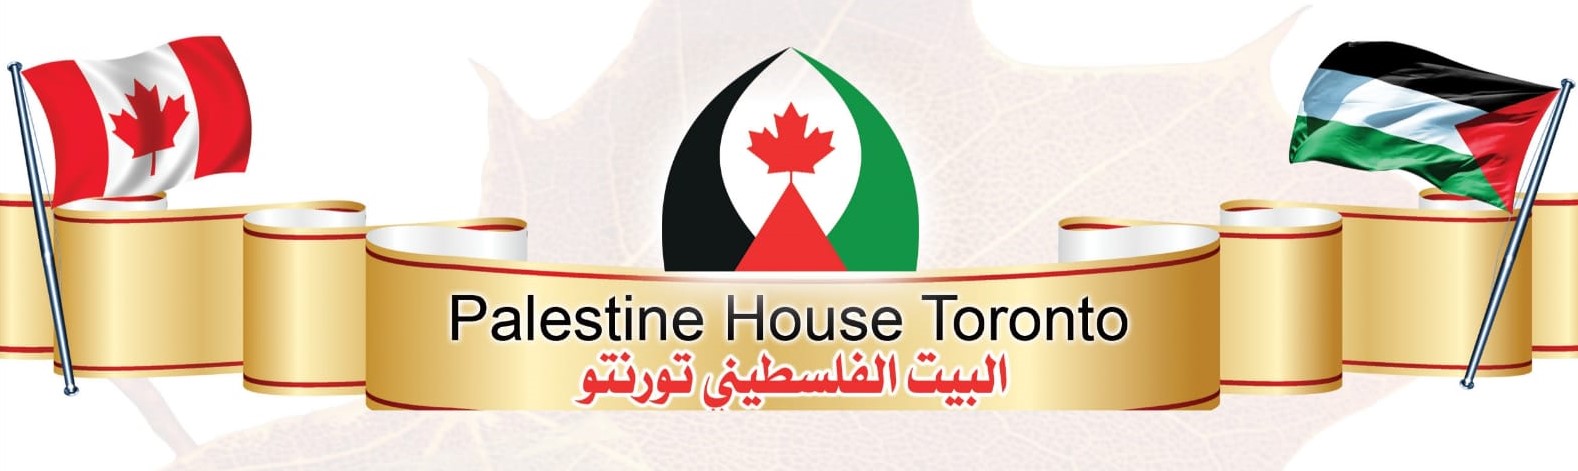 Palestine House Toronto Logo